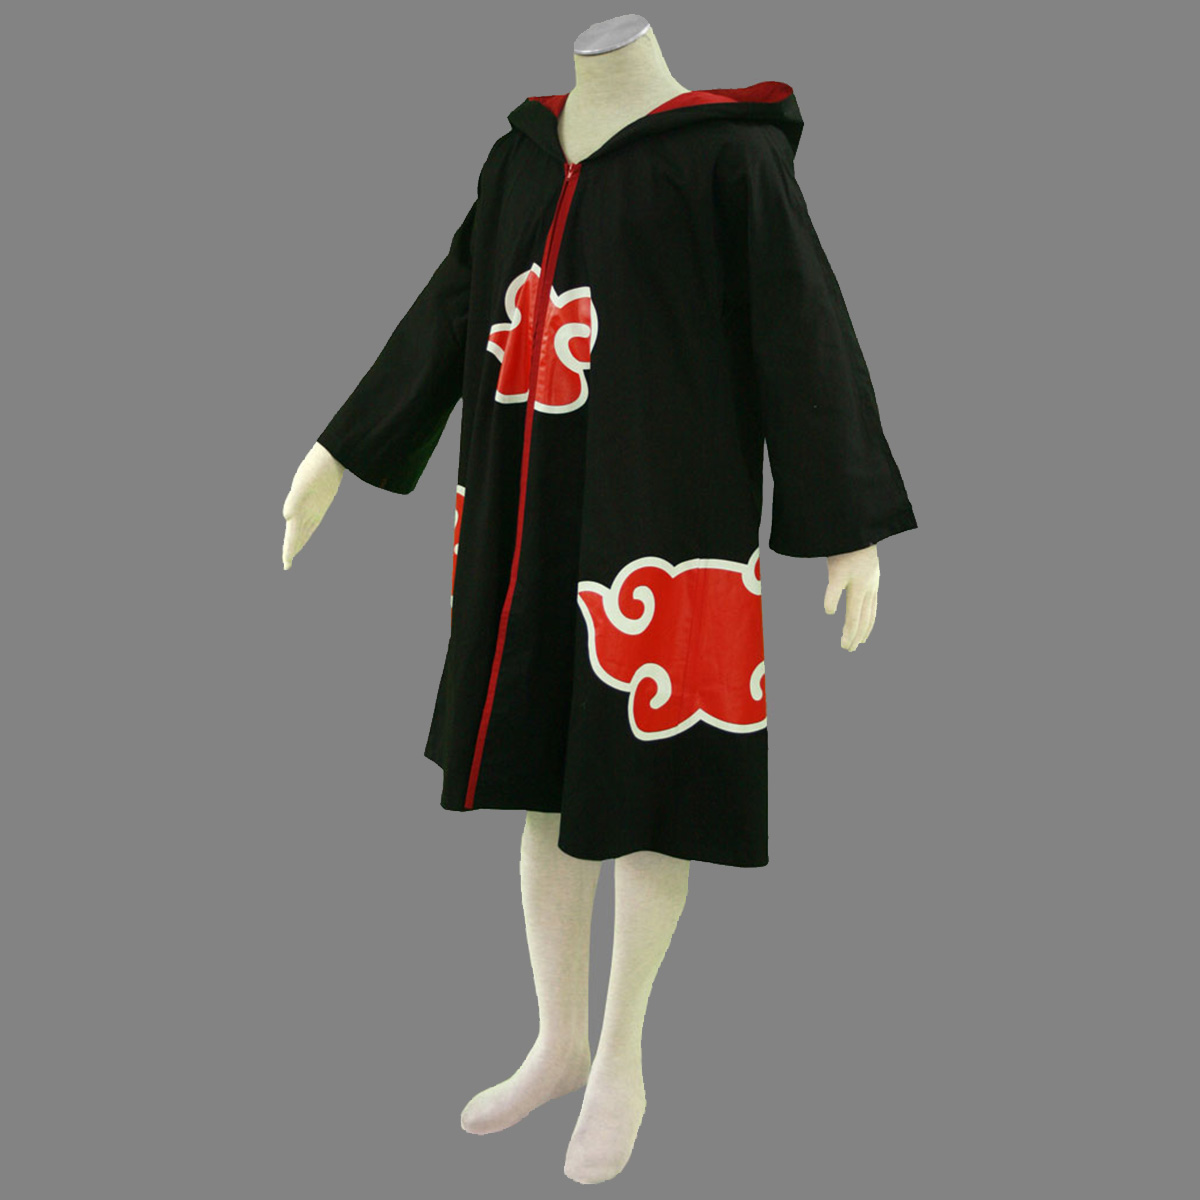 Naruto Taka Organization Anime Cosplay Costumes Outfit